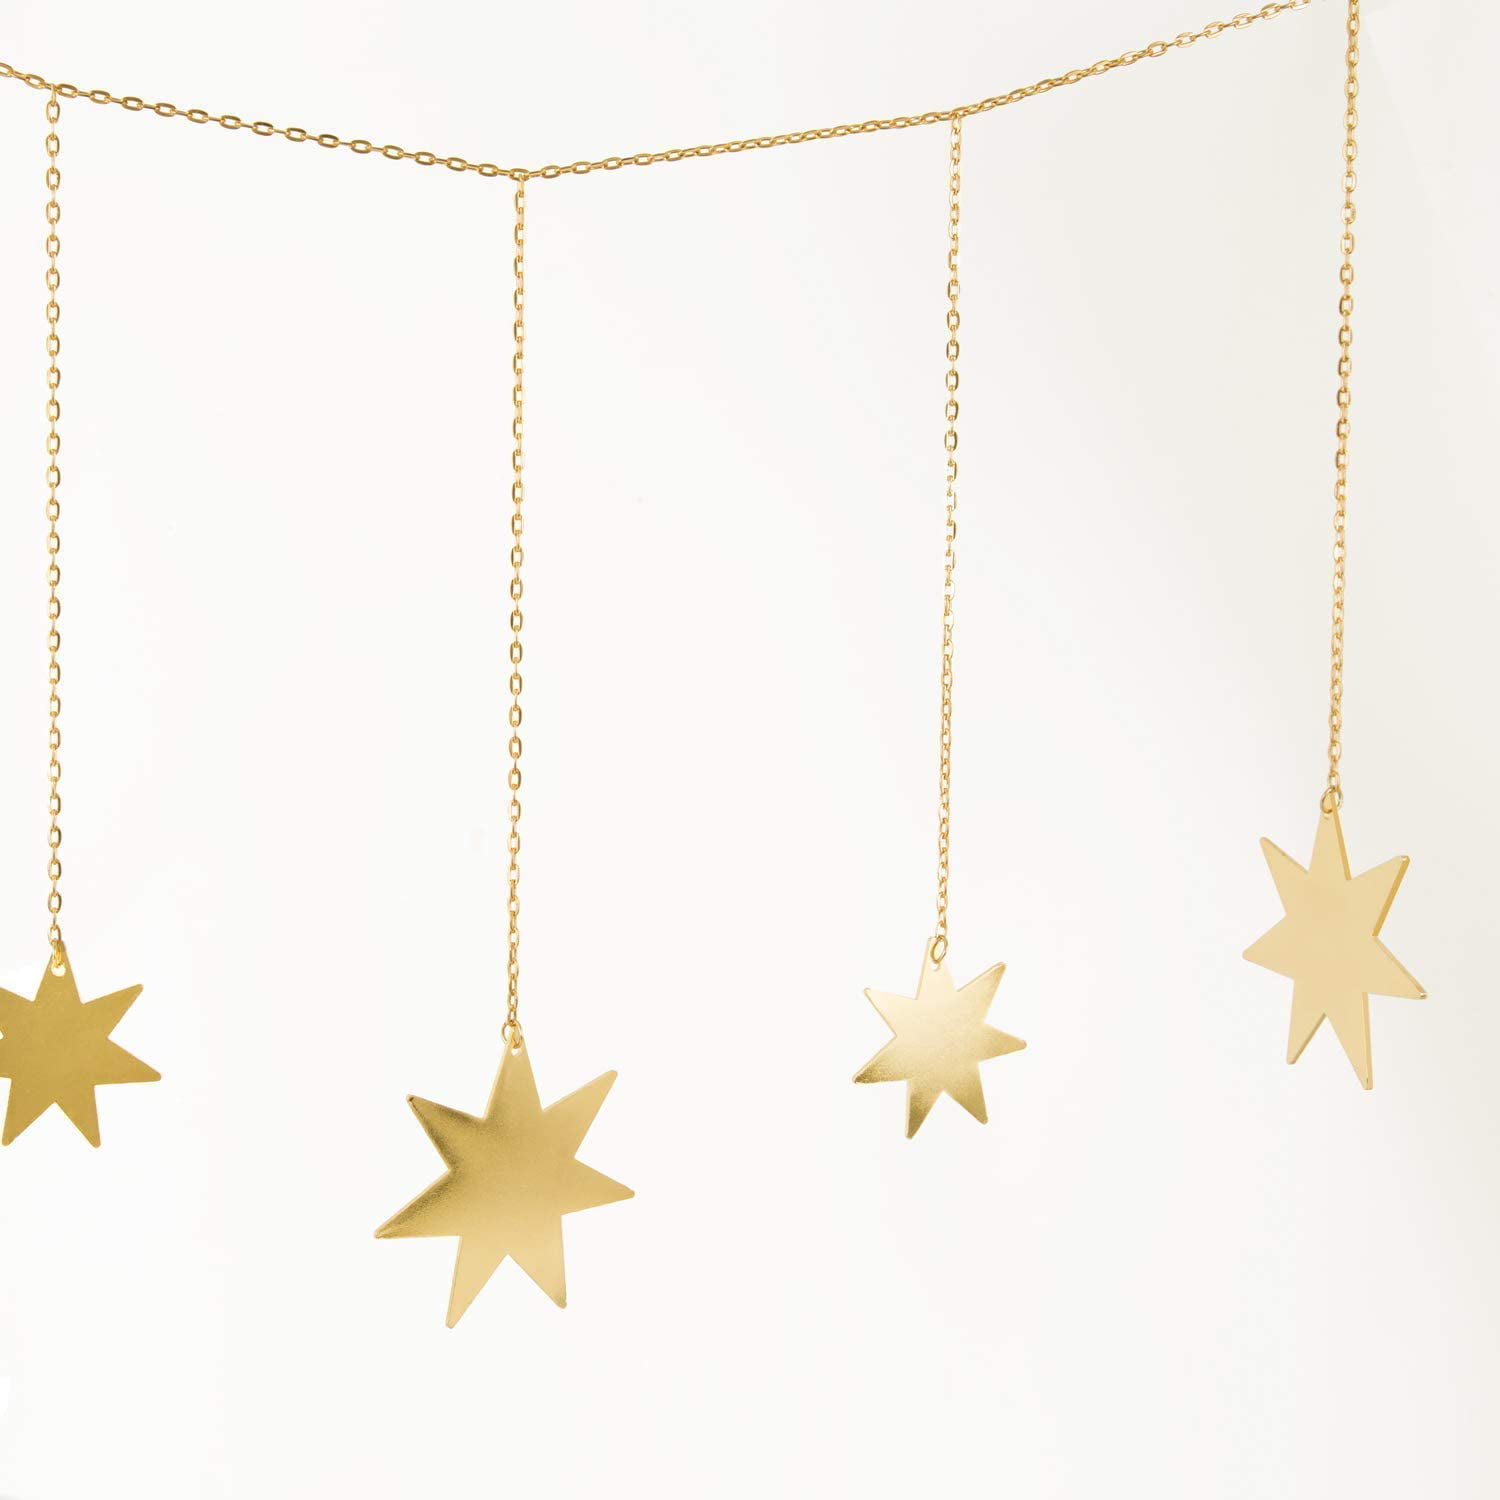 Mkono Star Garland Gold Glitter Star Metal Wall Hanging Decoration Christmas Ornaments Decor for Wedding Home Office Nursery Room Dorm